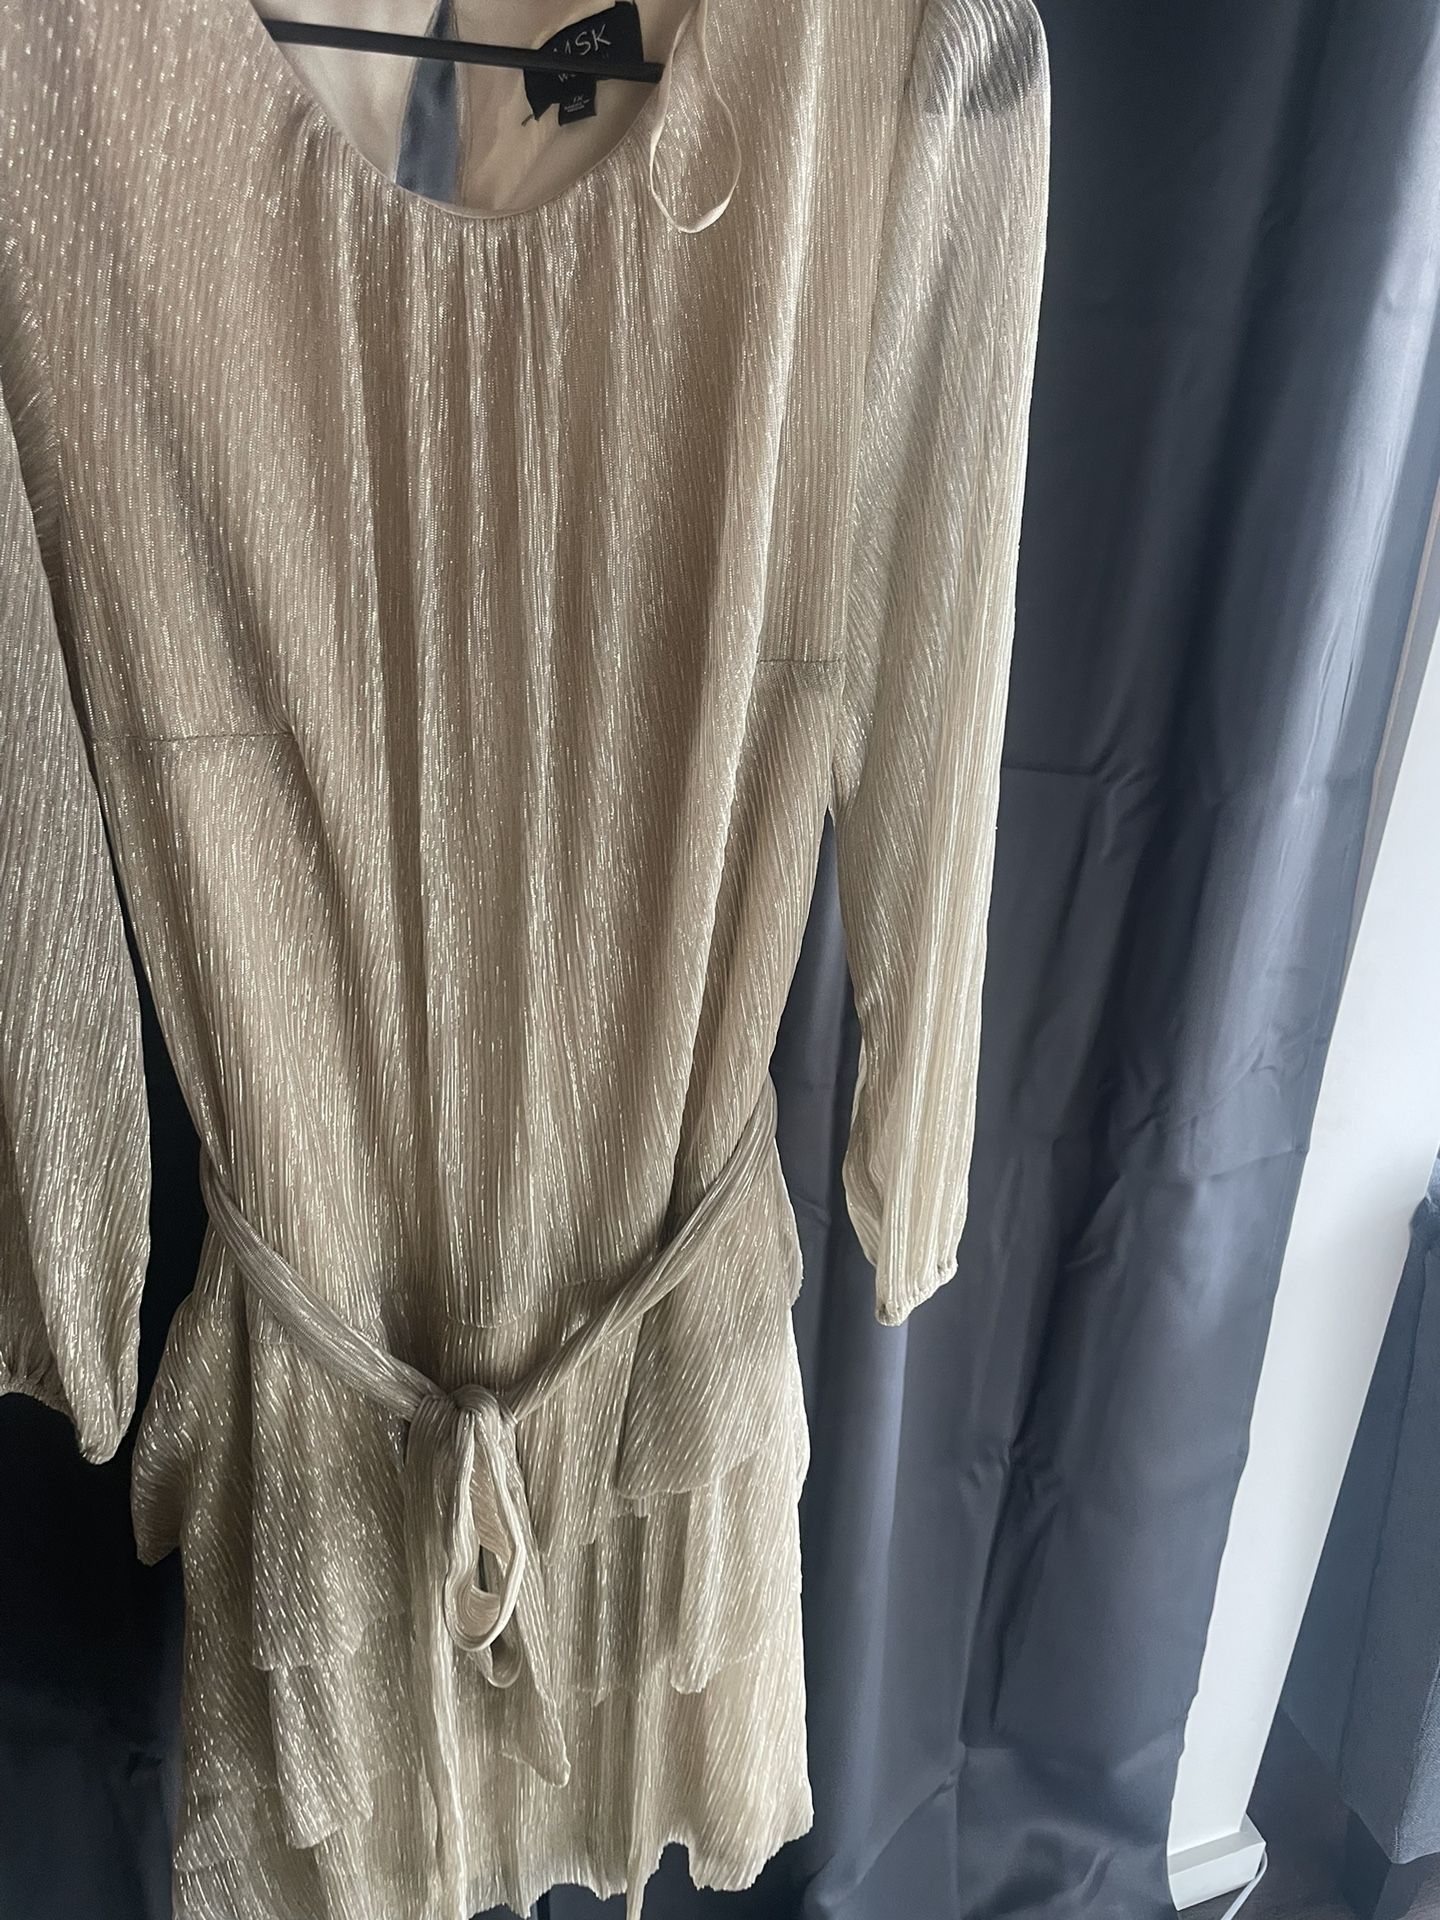 MSK Gold/metalic Dress Size 1x  Plus Size New